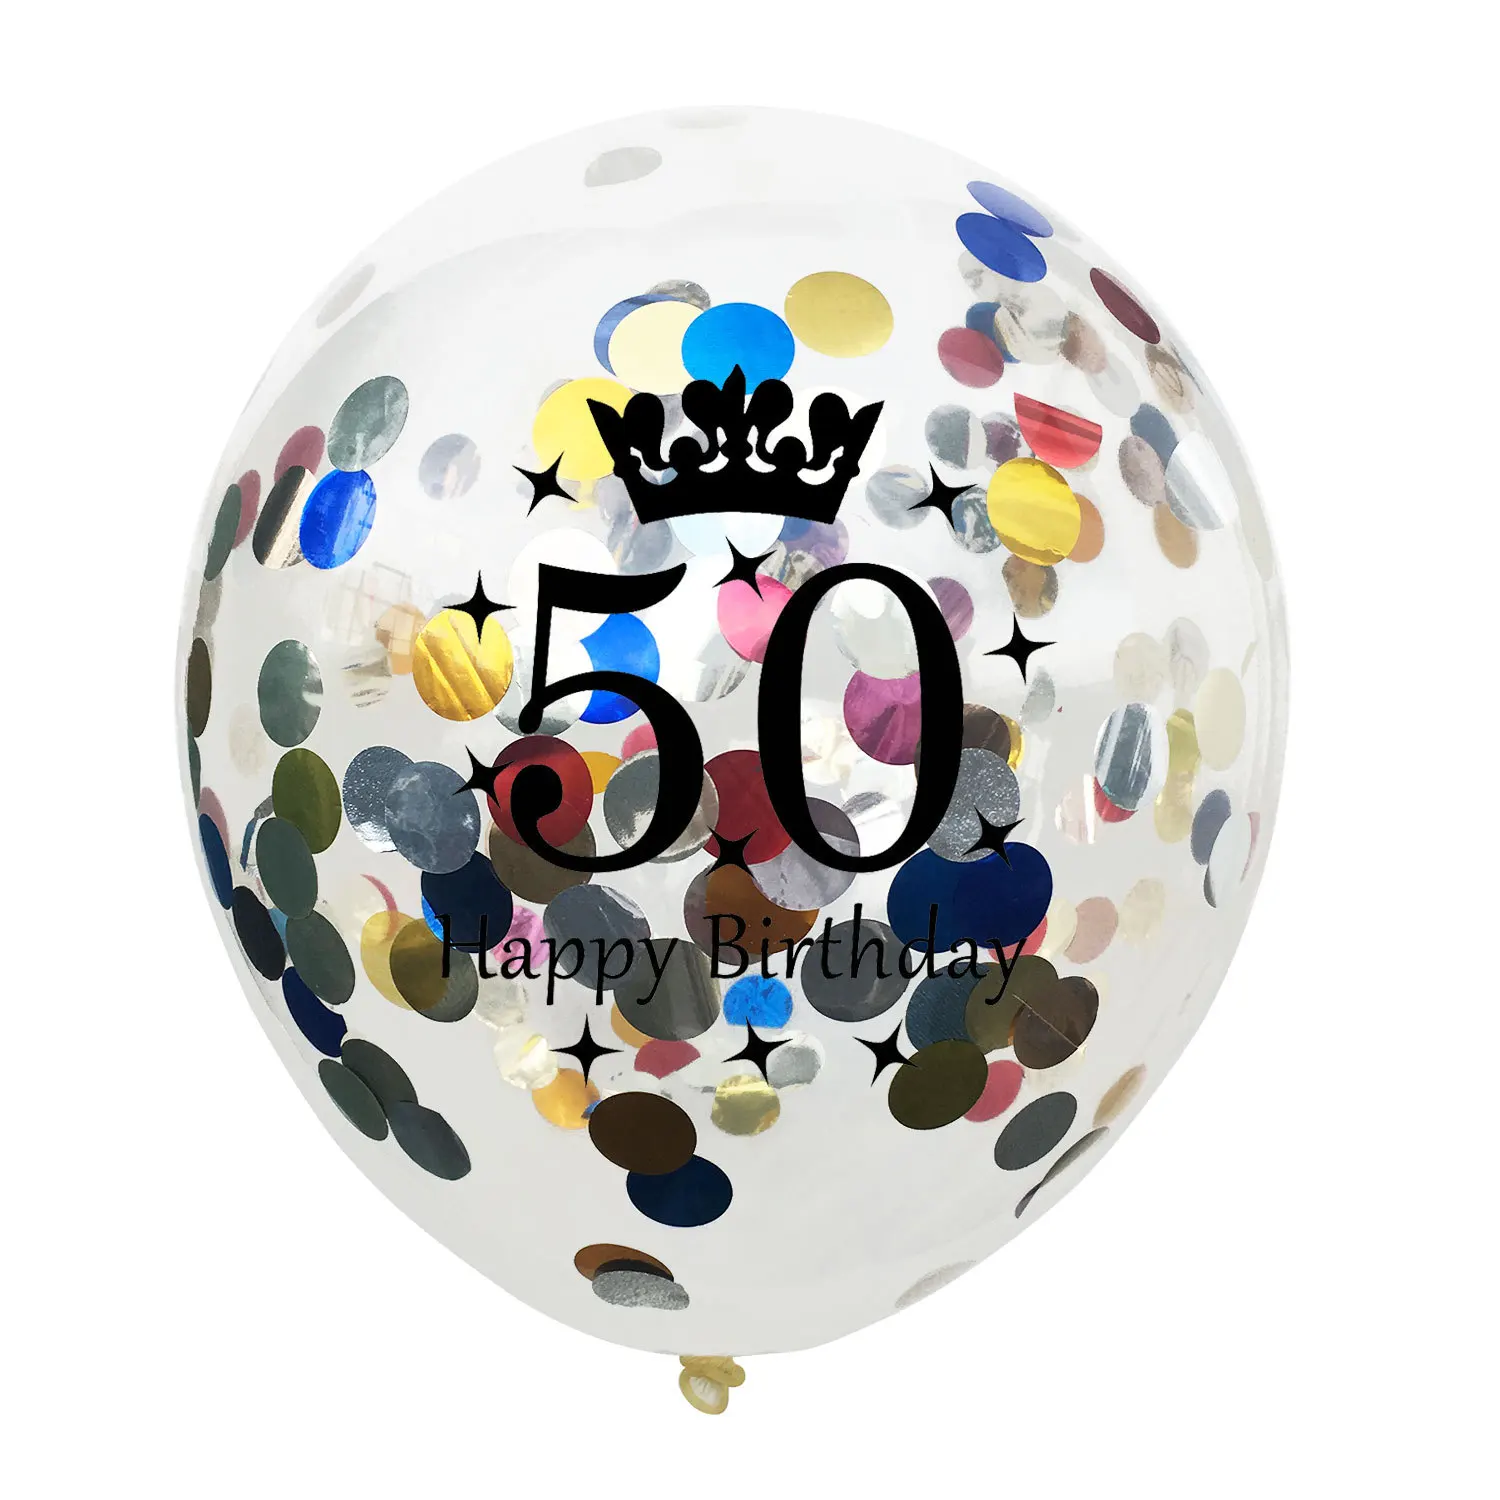 10pcs/lot Happy Birthday Balloon Birthday Number Balloons 30 40 50 60 Latex Balloons Wedding Anniversary Decor Birthday Supplies